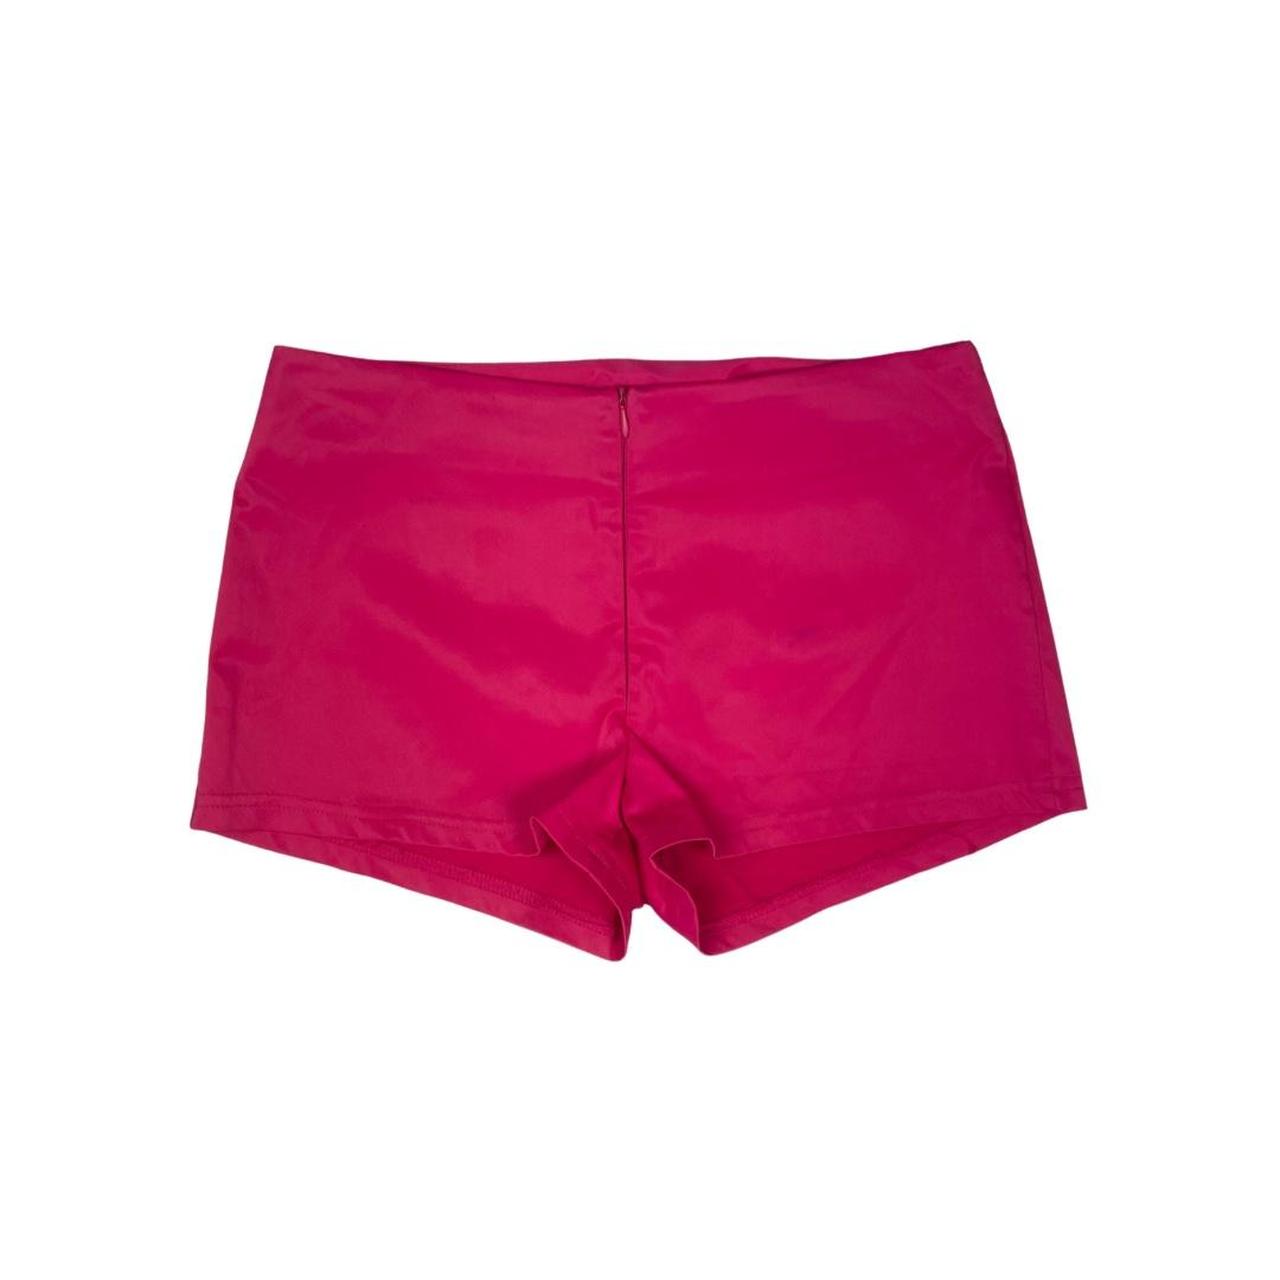 90’s New Look hot pink short shorts 🍃 Size: UK 10... - Depop